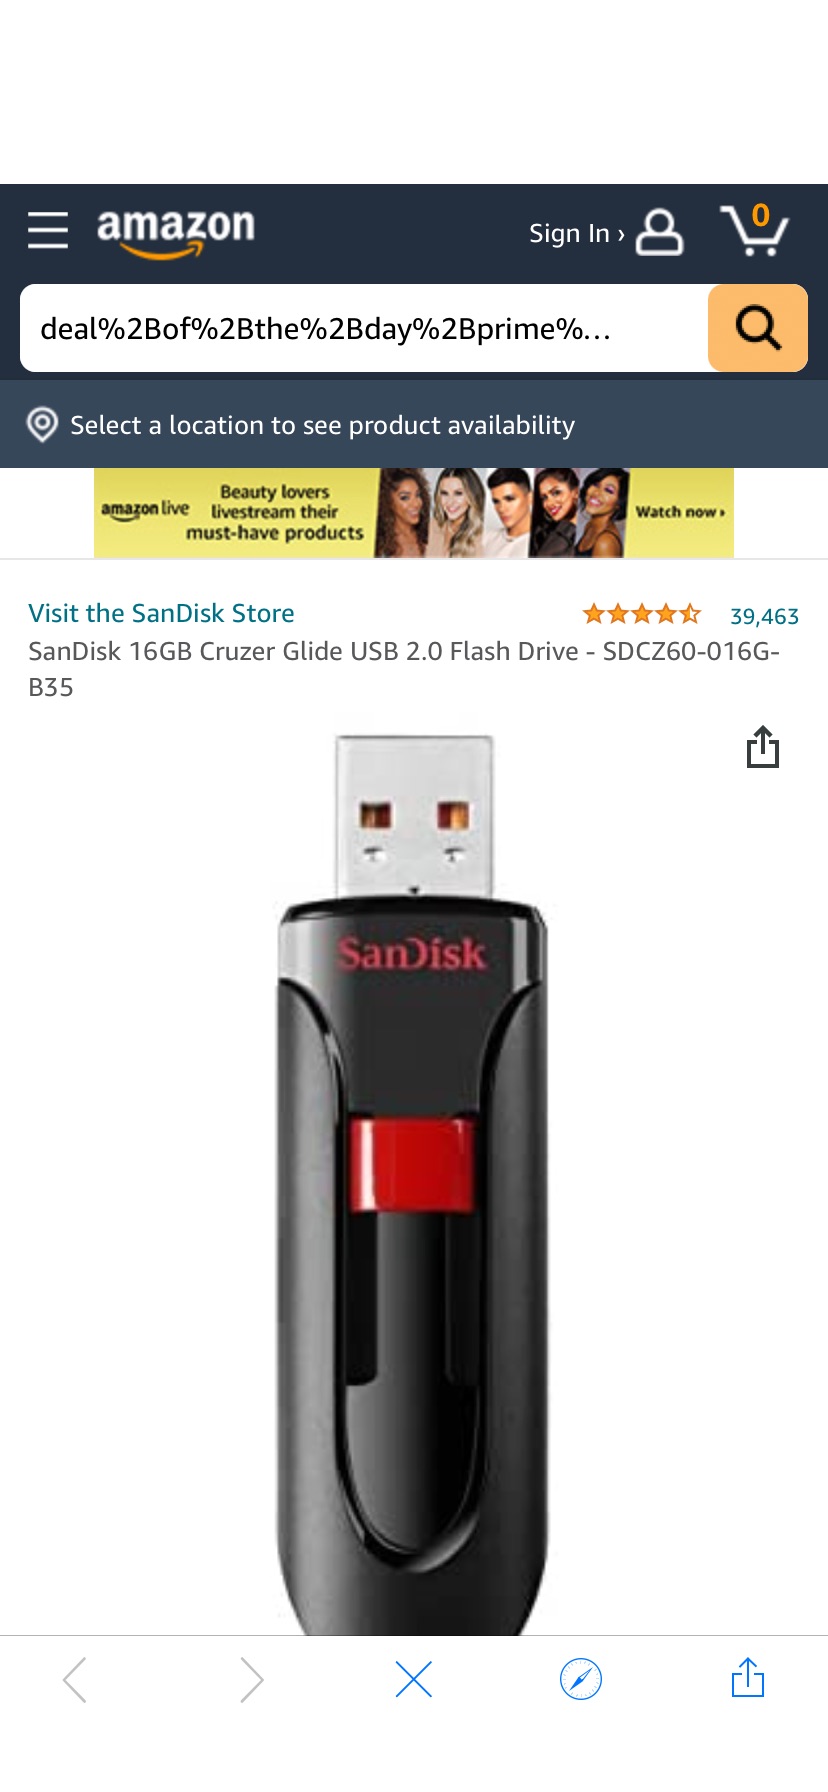 Amazon.com: SanDisk 16GB Cruzer Glide USB 2.0 Flash Drive - SDCZ60-016G-B35 : Everything Else数据卡